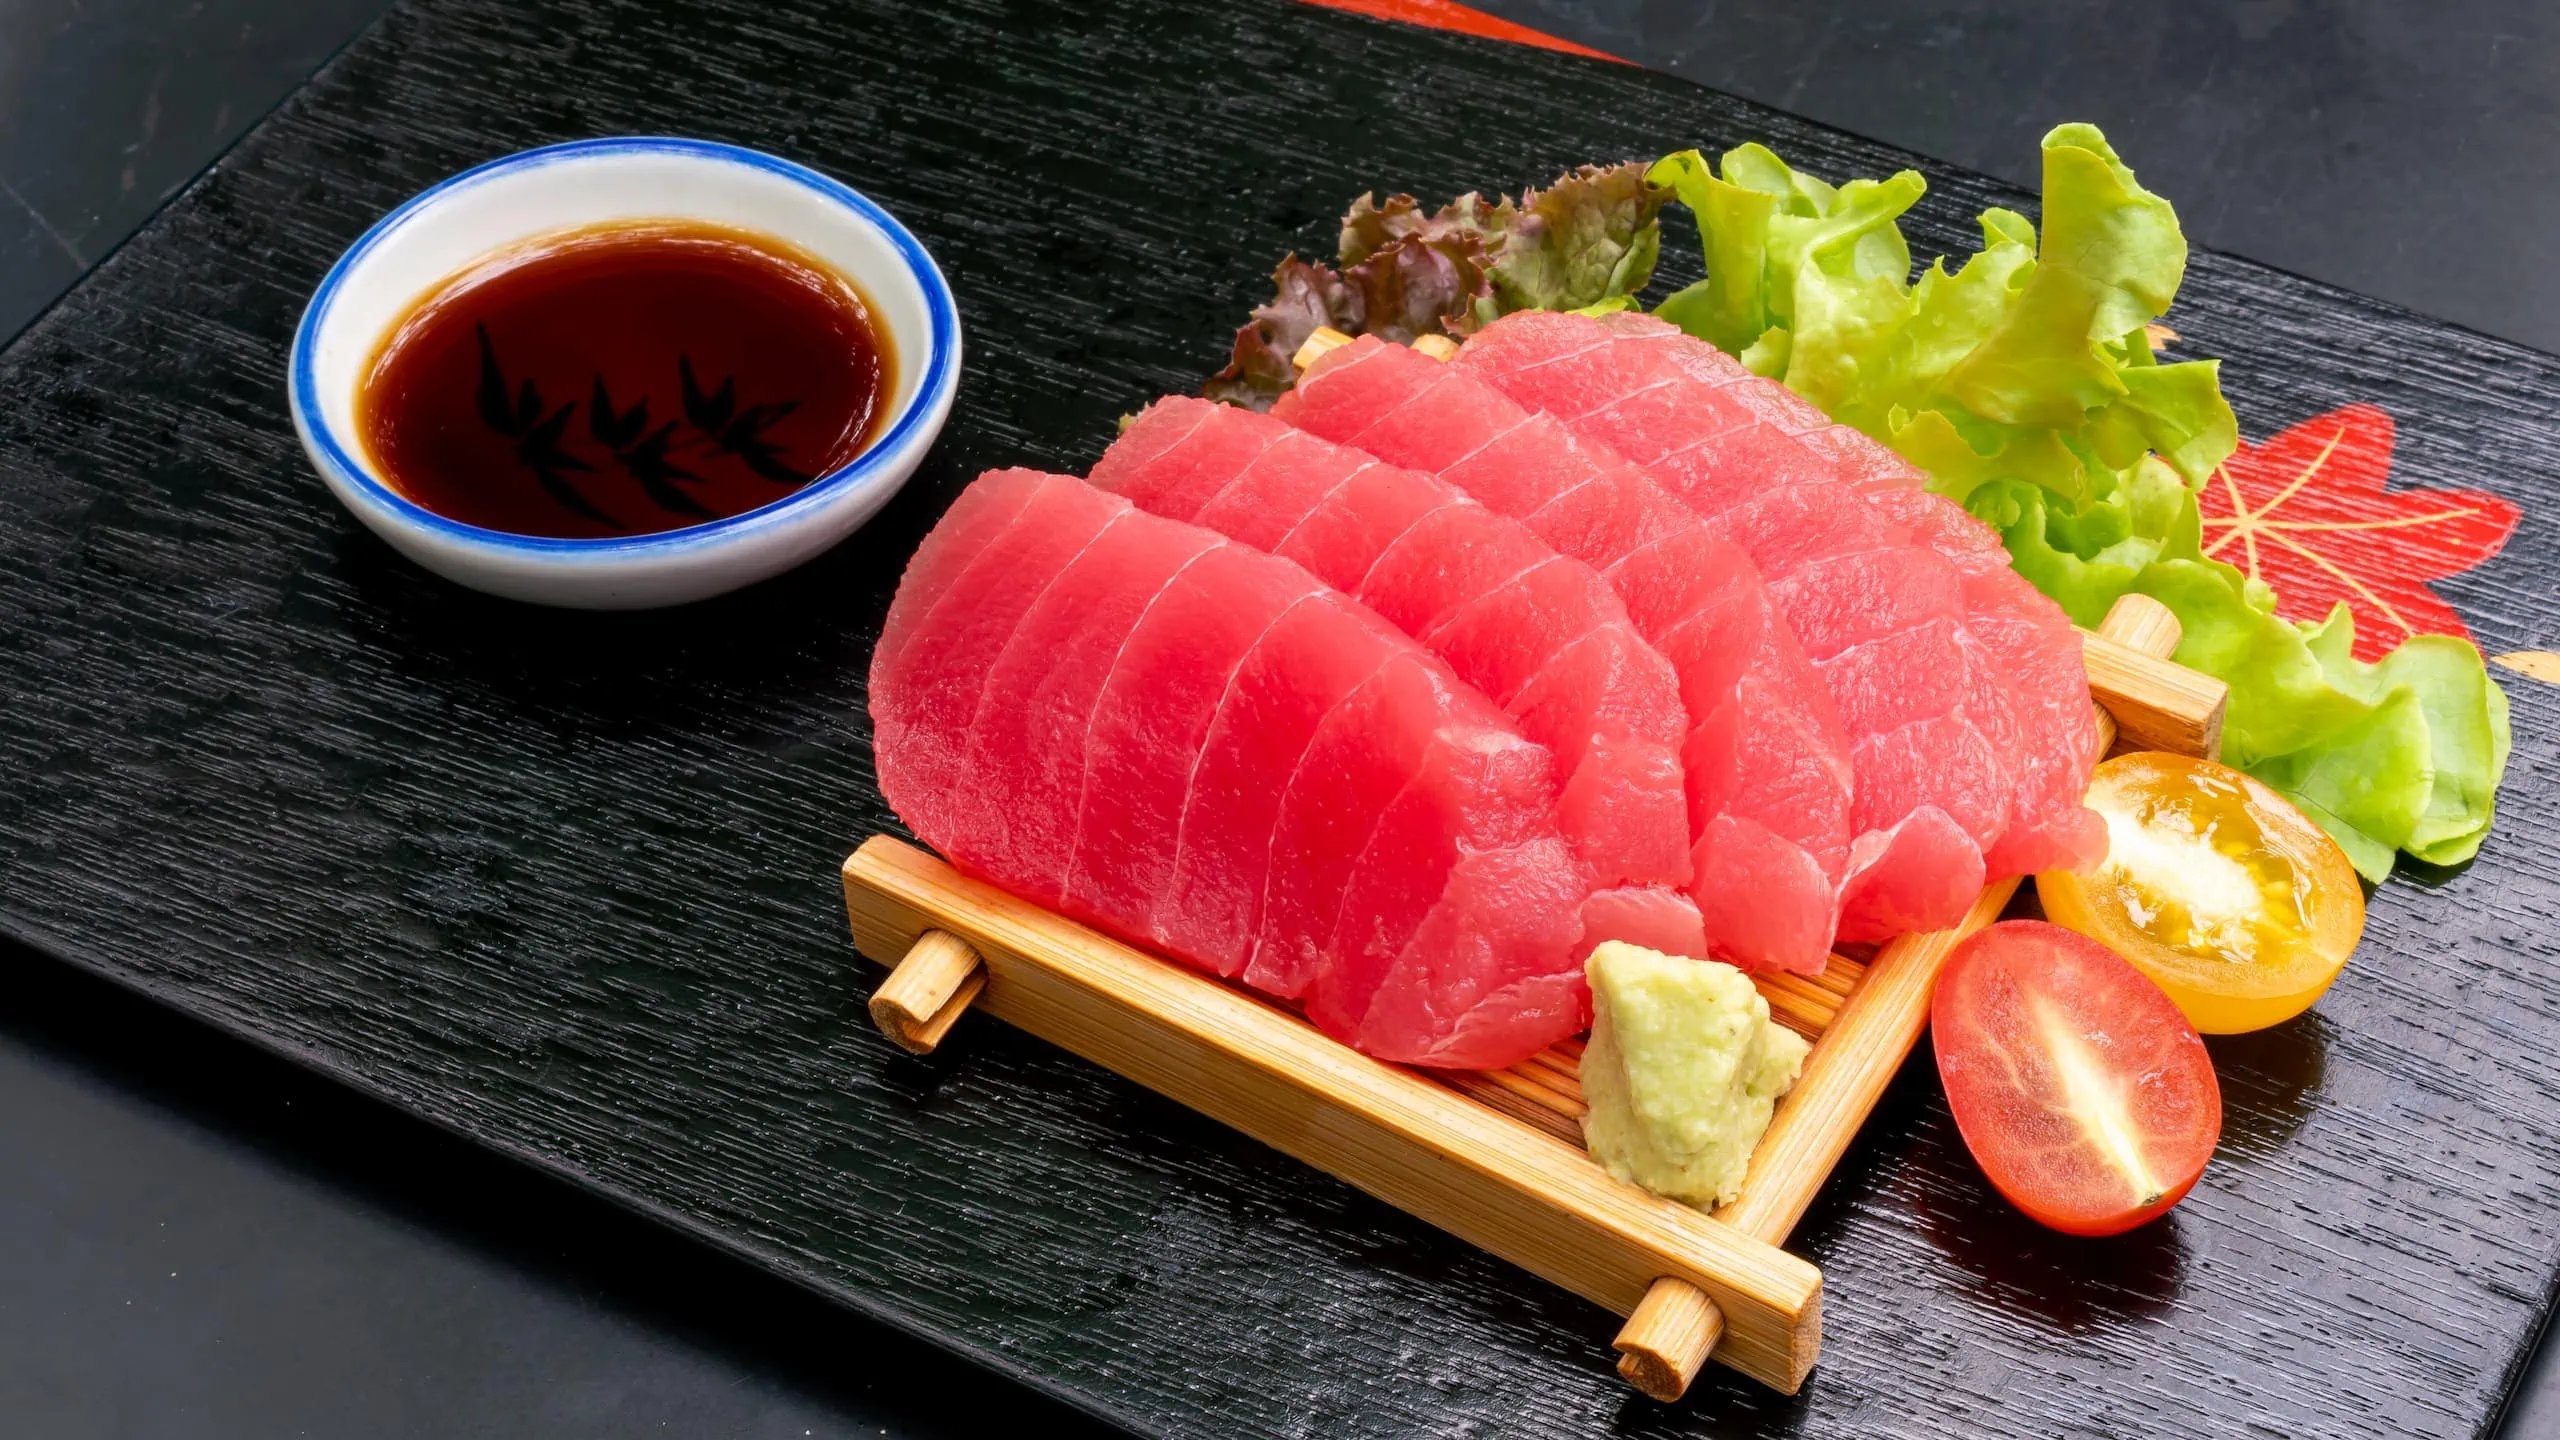 Our version of sashimi tuna